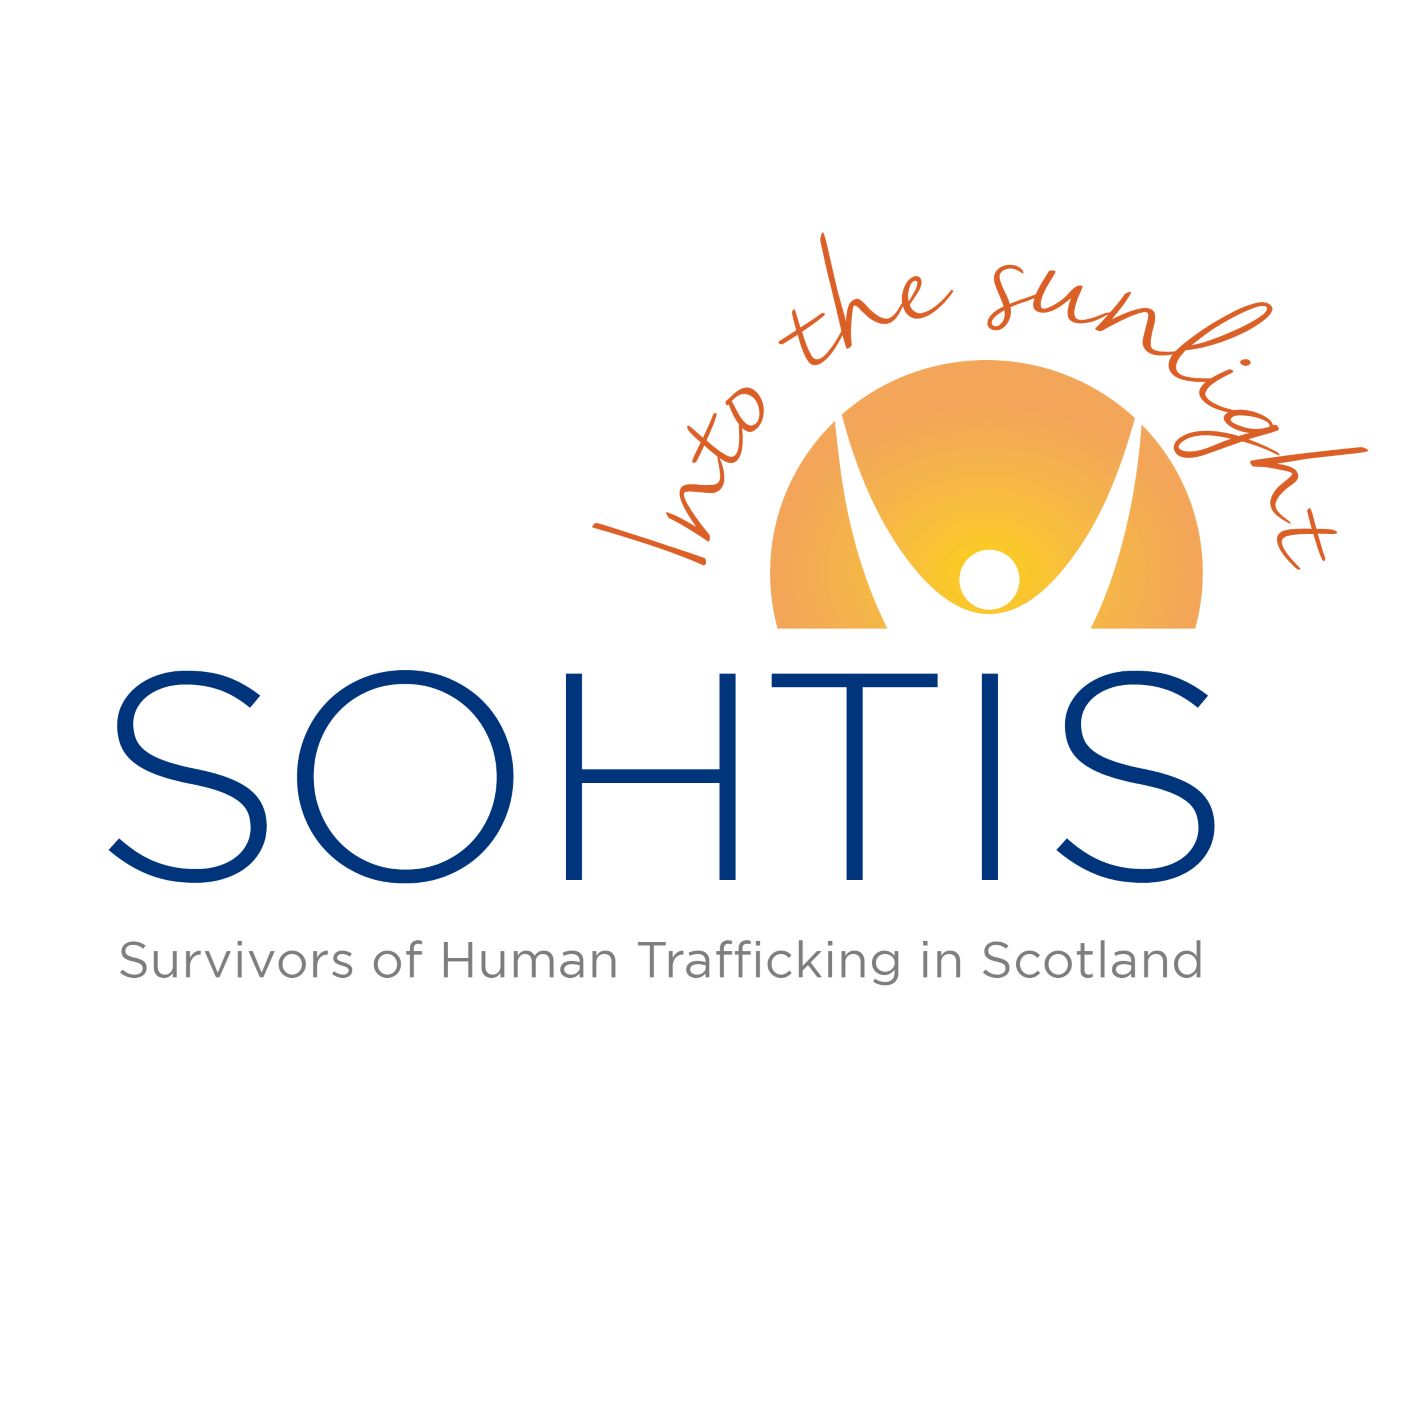 SOHTIS - Survivors of Human Trafficking in Scotland